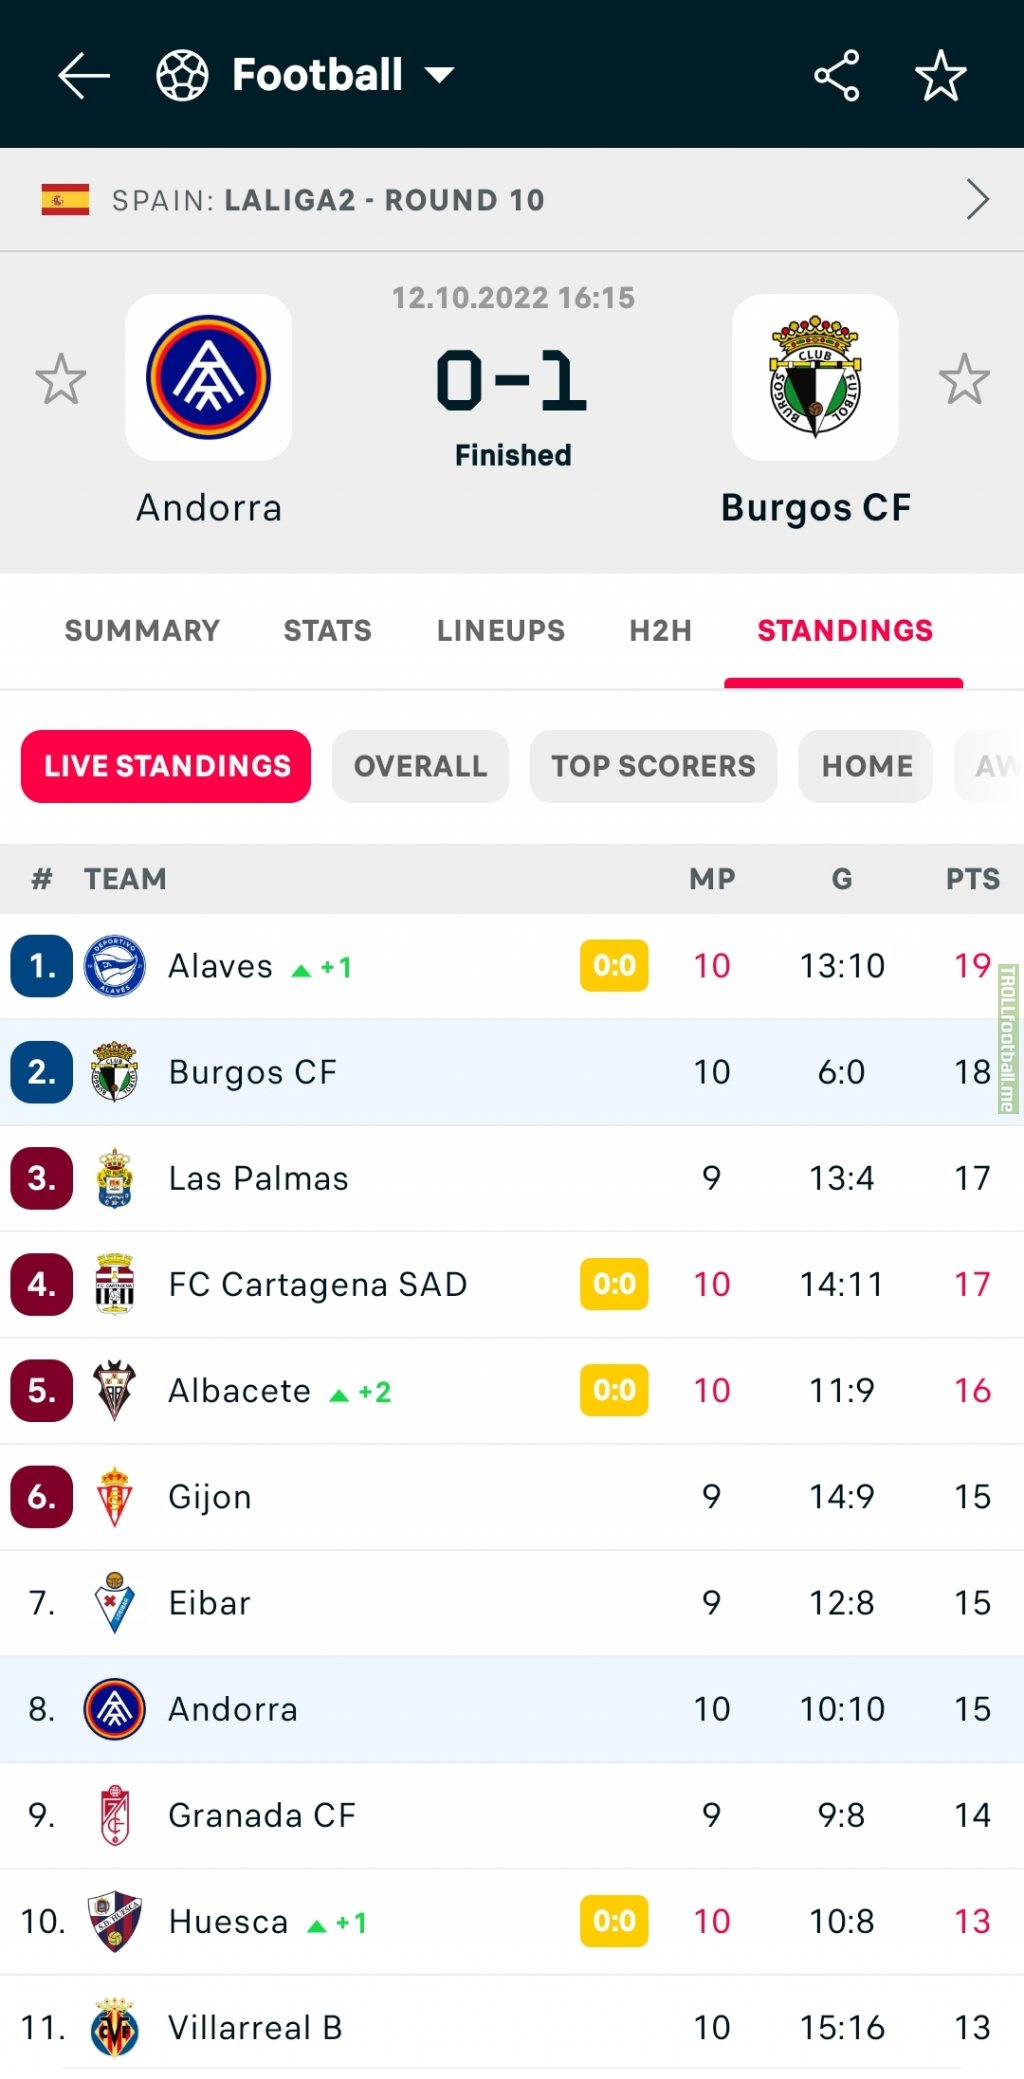 Burgos CF continues it's amazing run. 10 games, 0 conseded